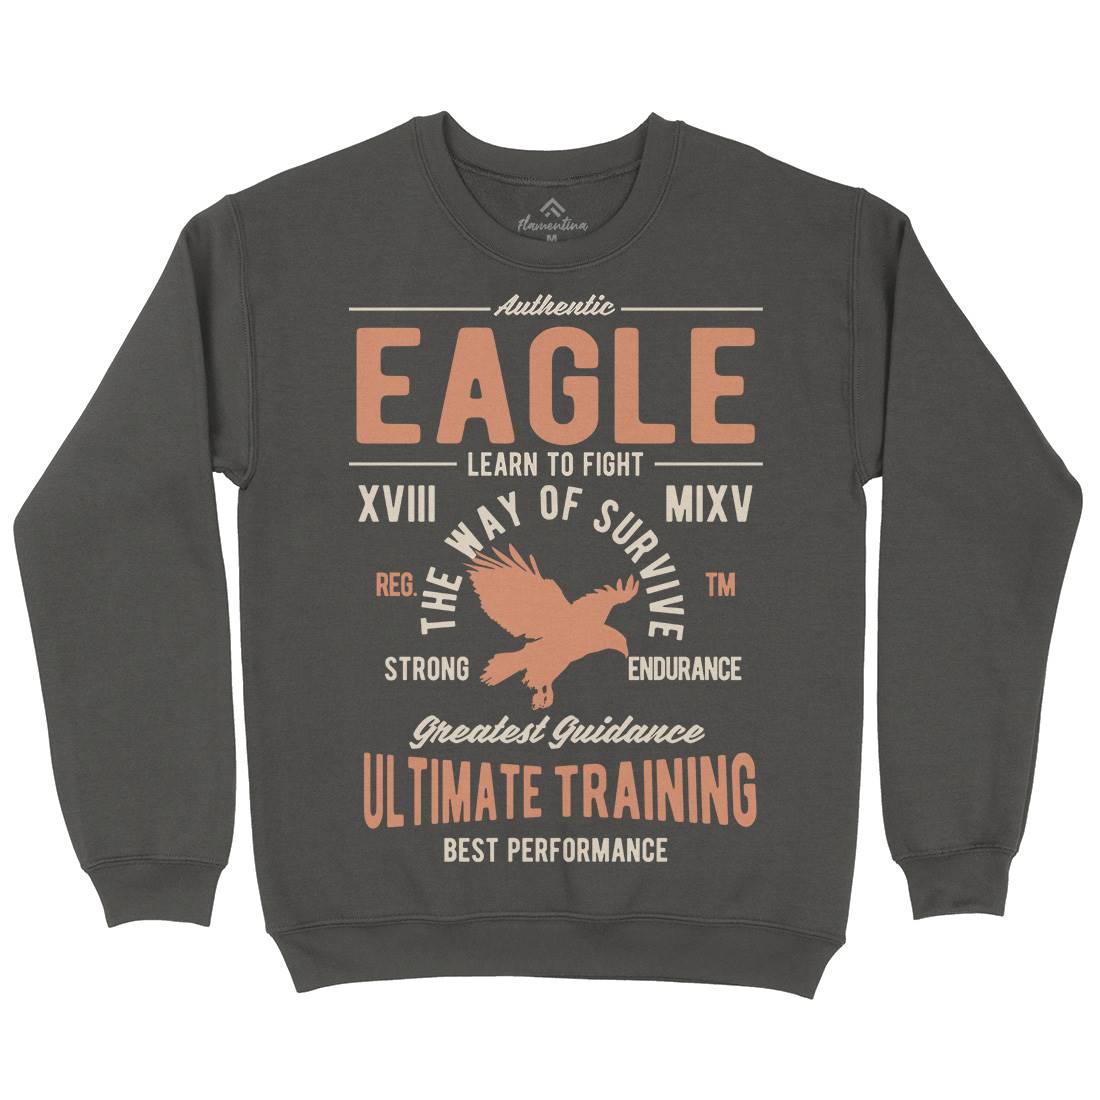 Authentic Eagle Kids Crew Neck Sweatshirt Animals B180